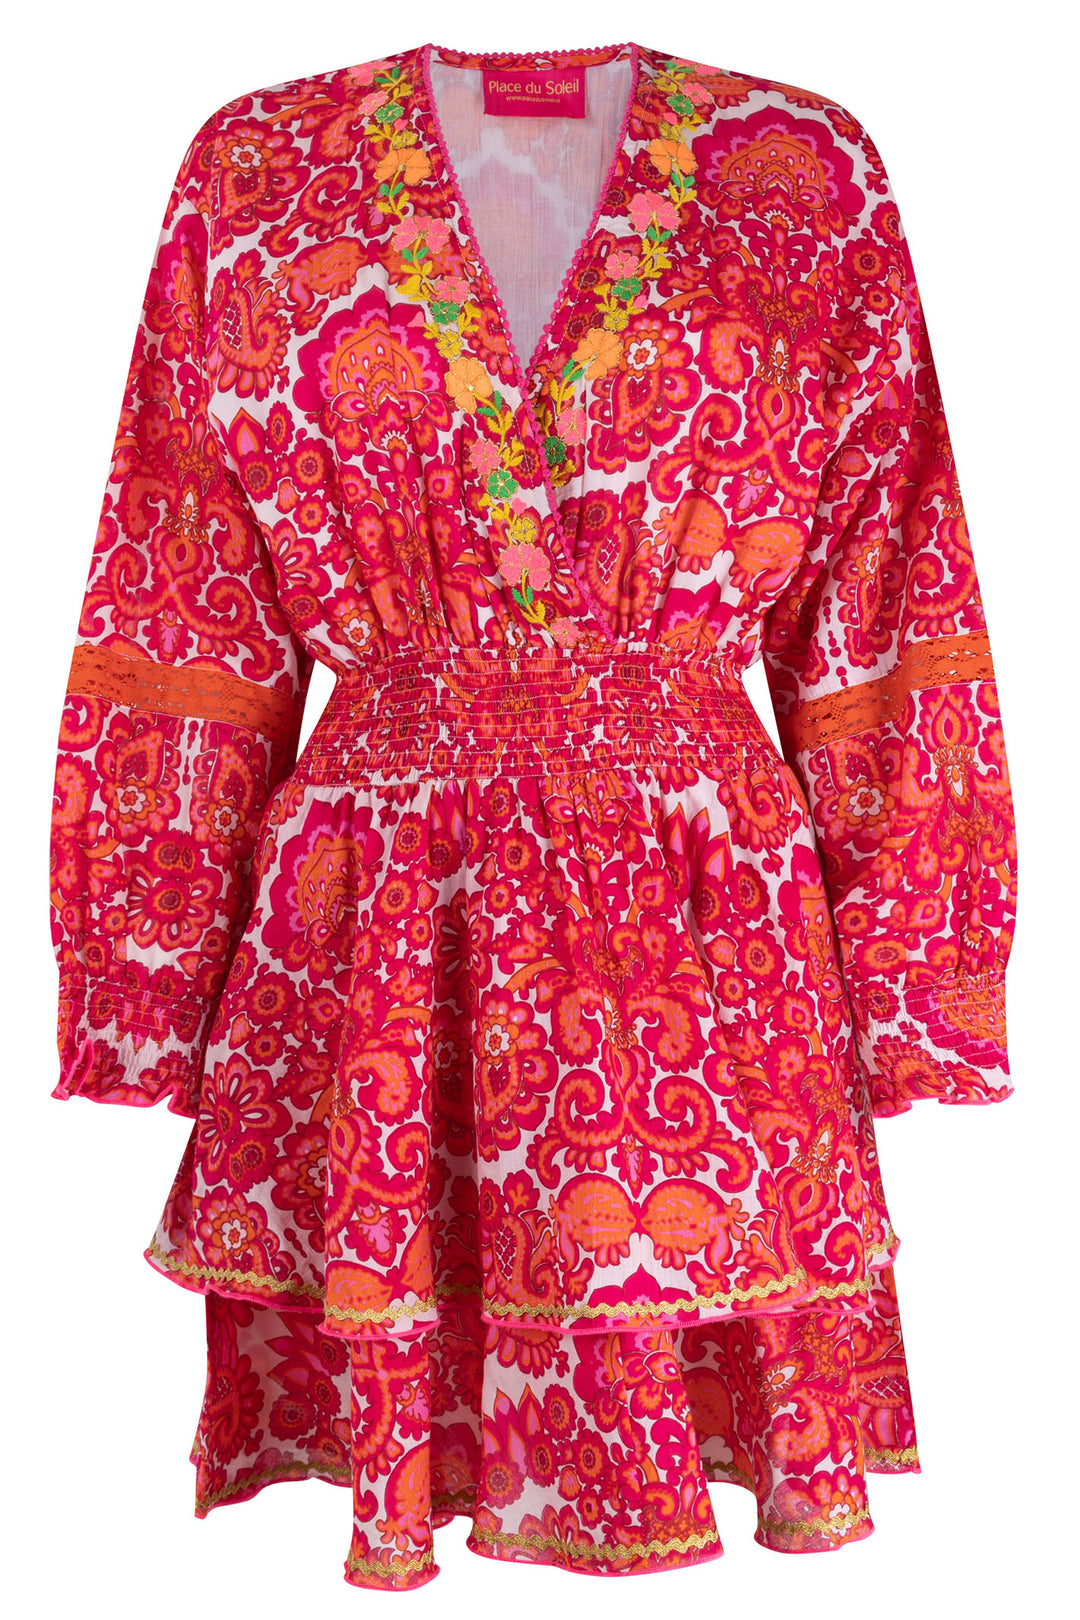 Place du Soleil S24 421 Red Orange Print Short Summer Dress - Olivia Grace Fashion